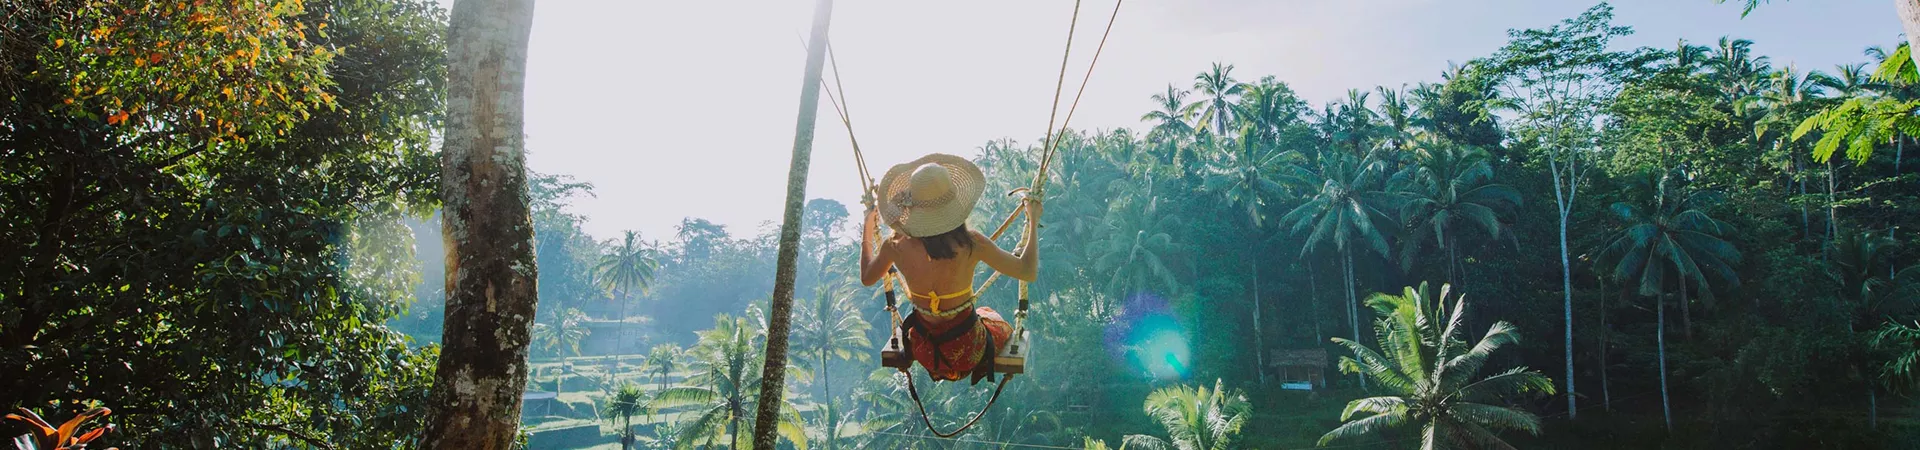 Woman on a swing among palm trees